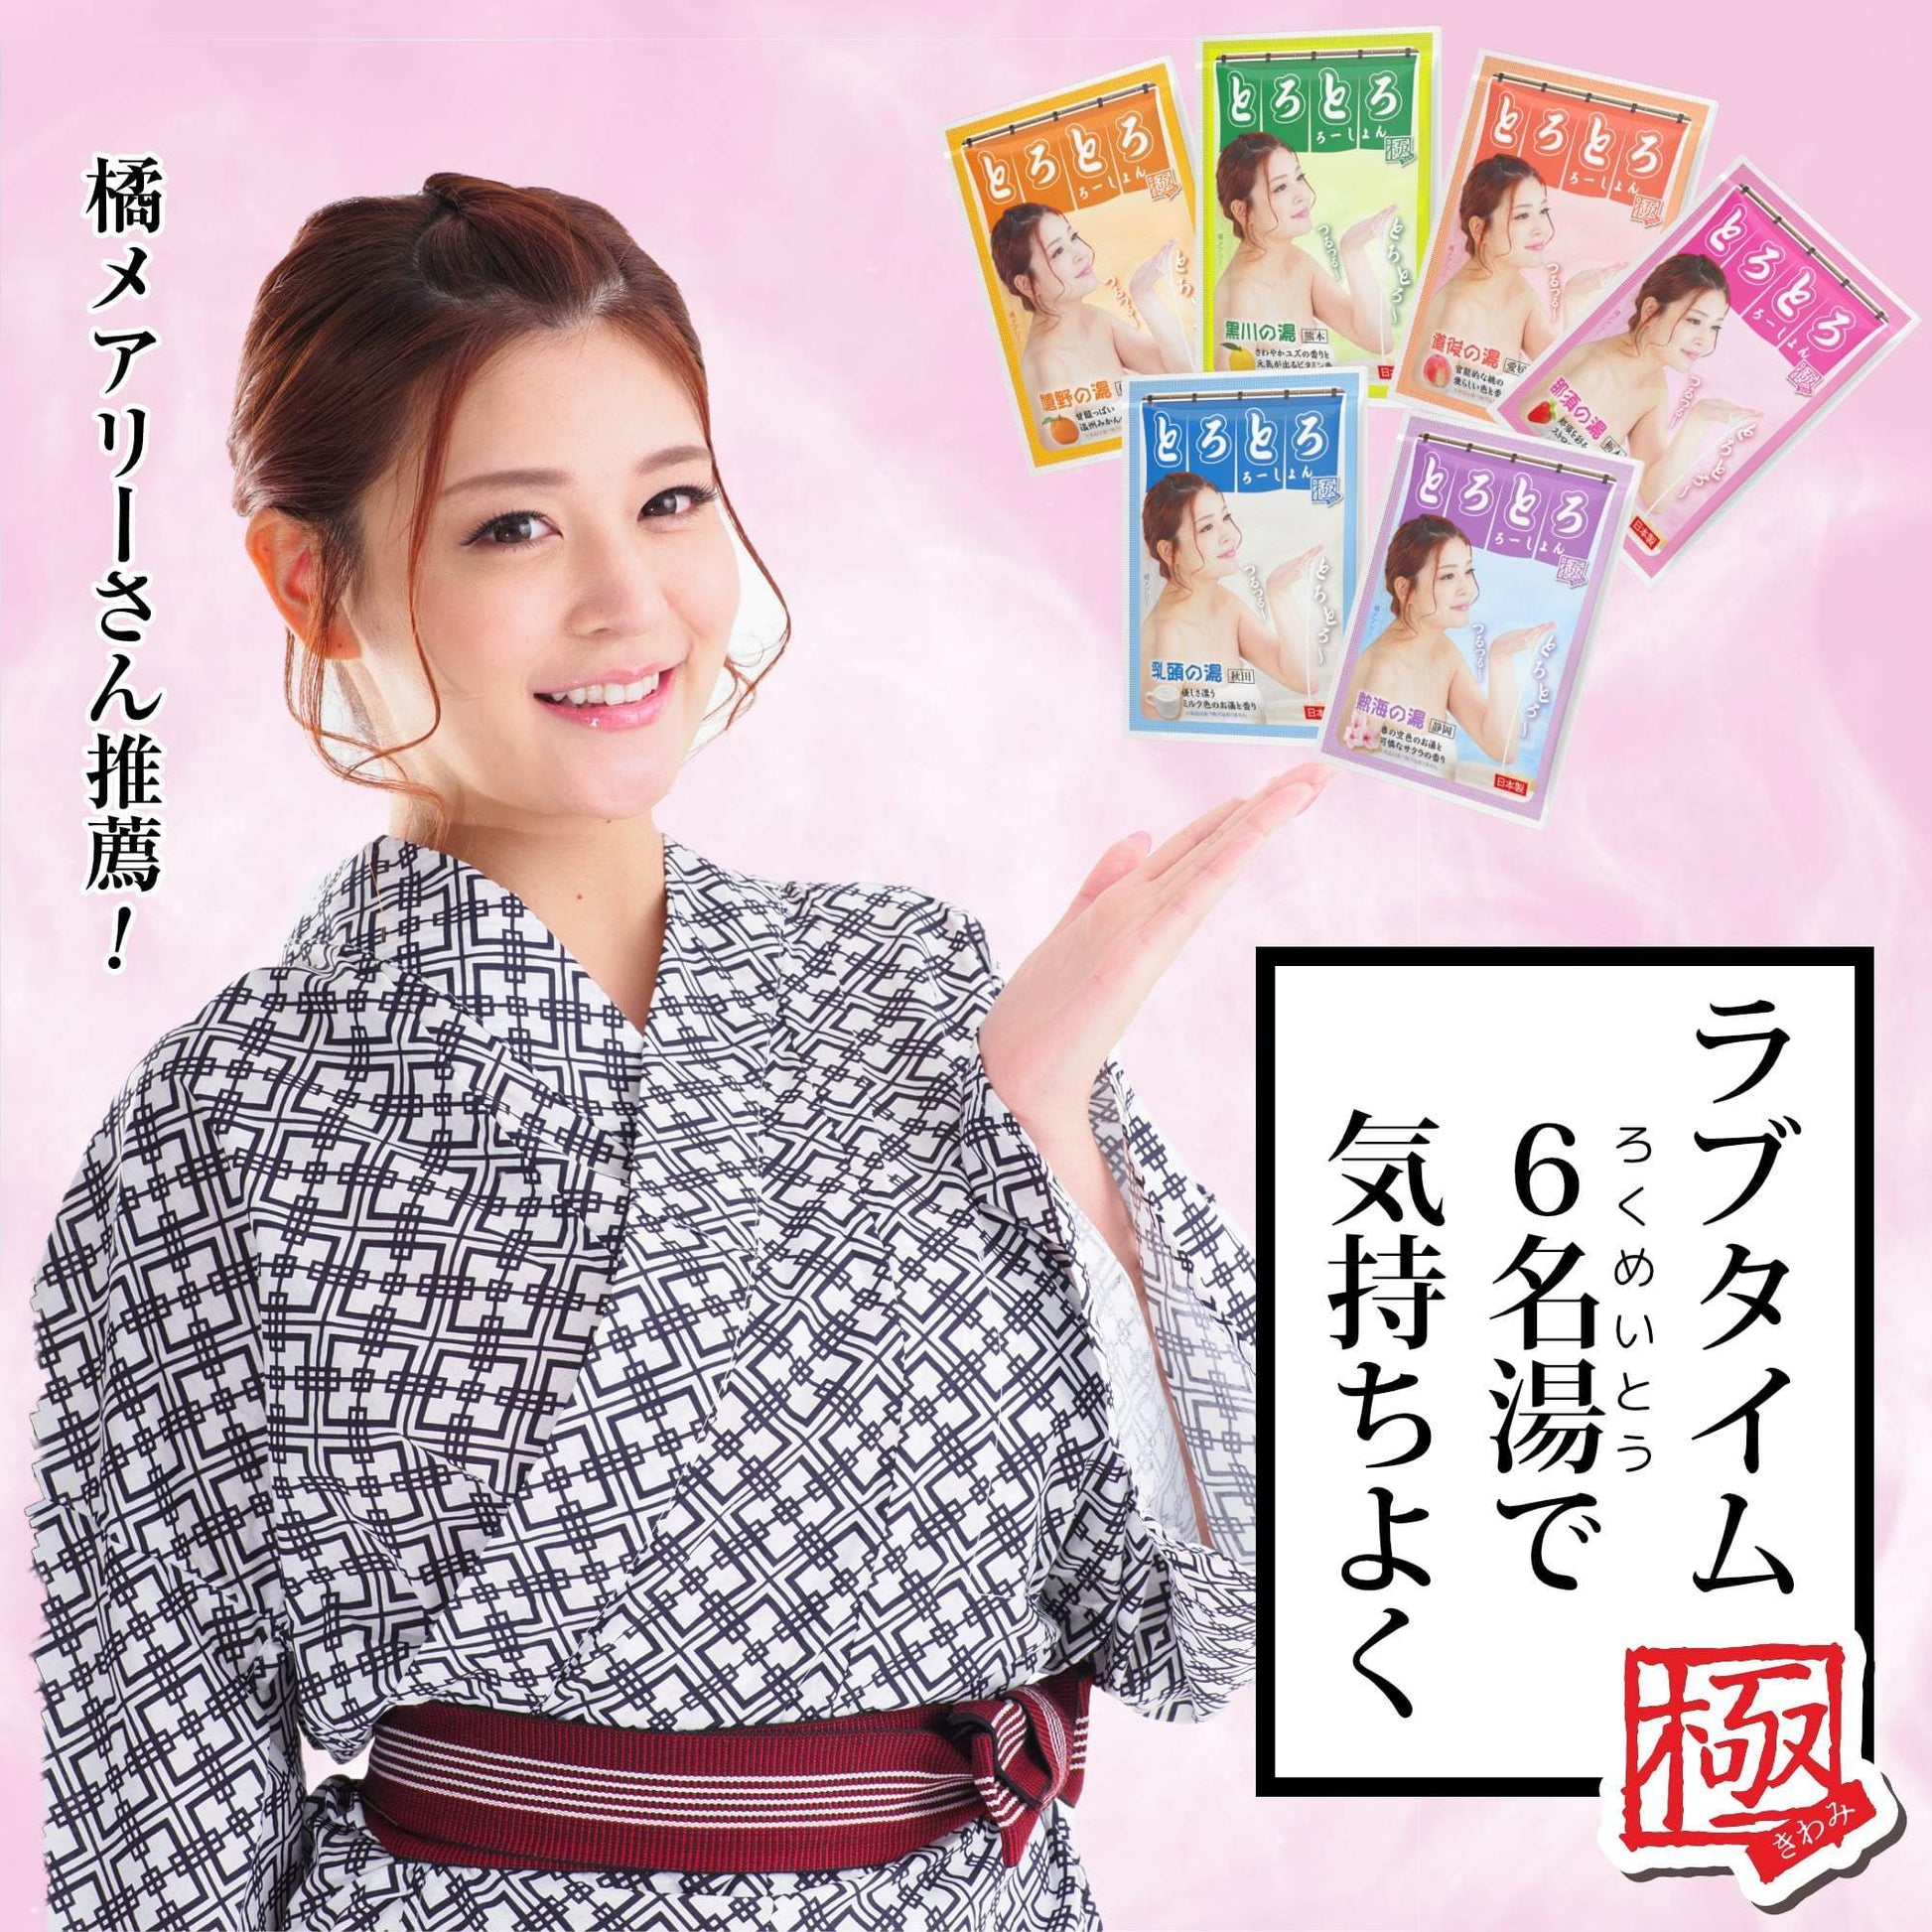 DNA JAPAN 【栃木】Toro Toro 浴室用草莓味溫泉乳液 那須の湯 極 沐浴用品 購買